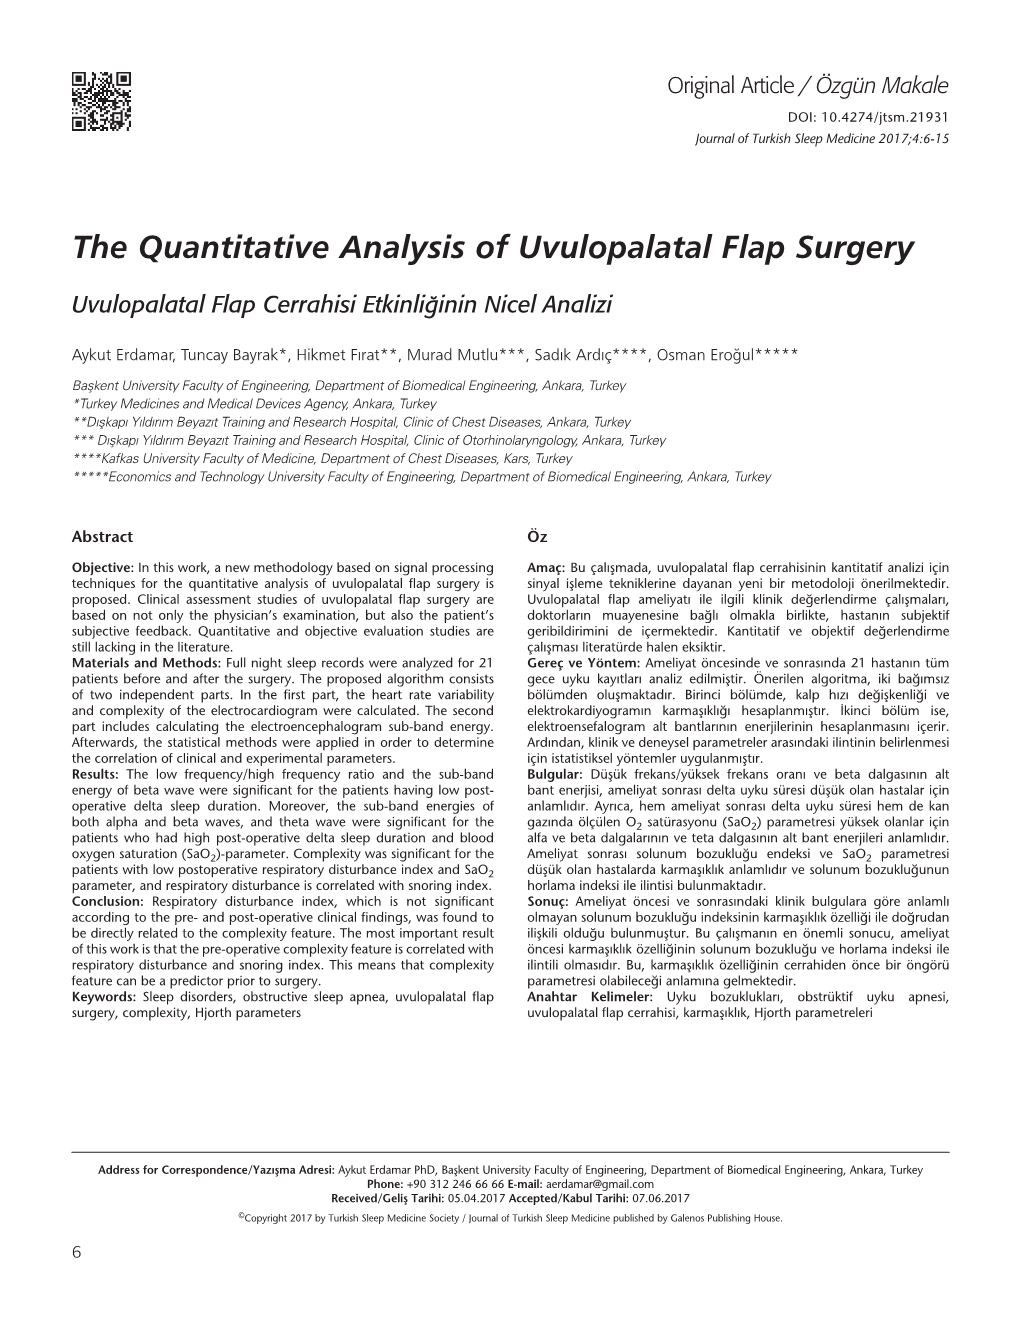 The Quantitative Analysis of Uvulopalatal Flap Surgery